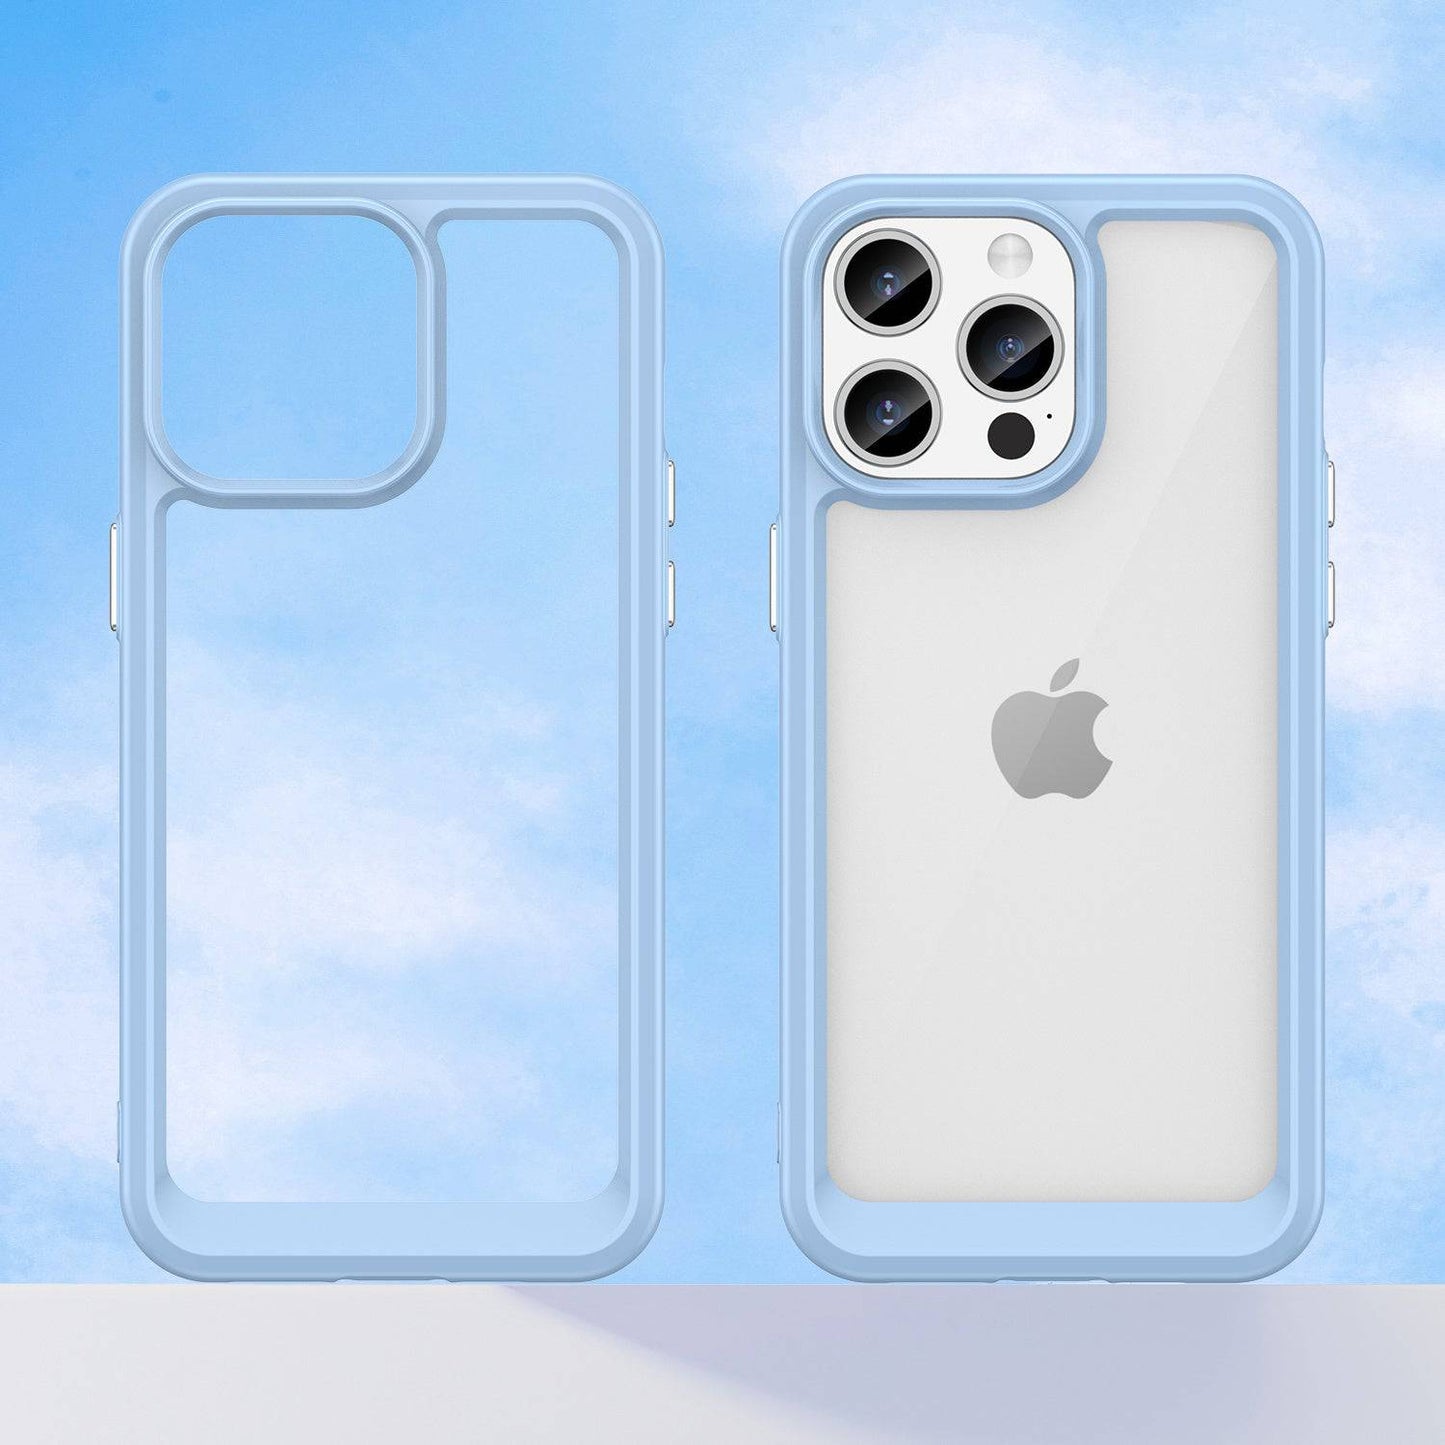 "Hochbelastbare Silikon-Acryl Schutzhülle für vielfältige iPhone Modelle"